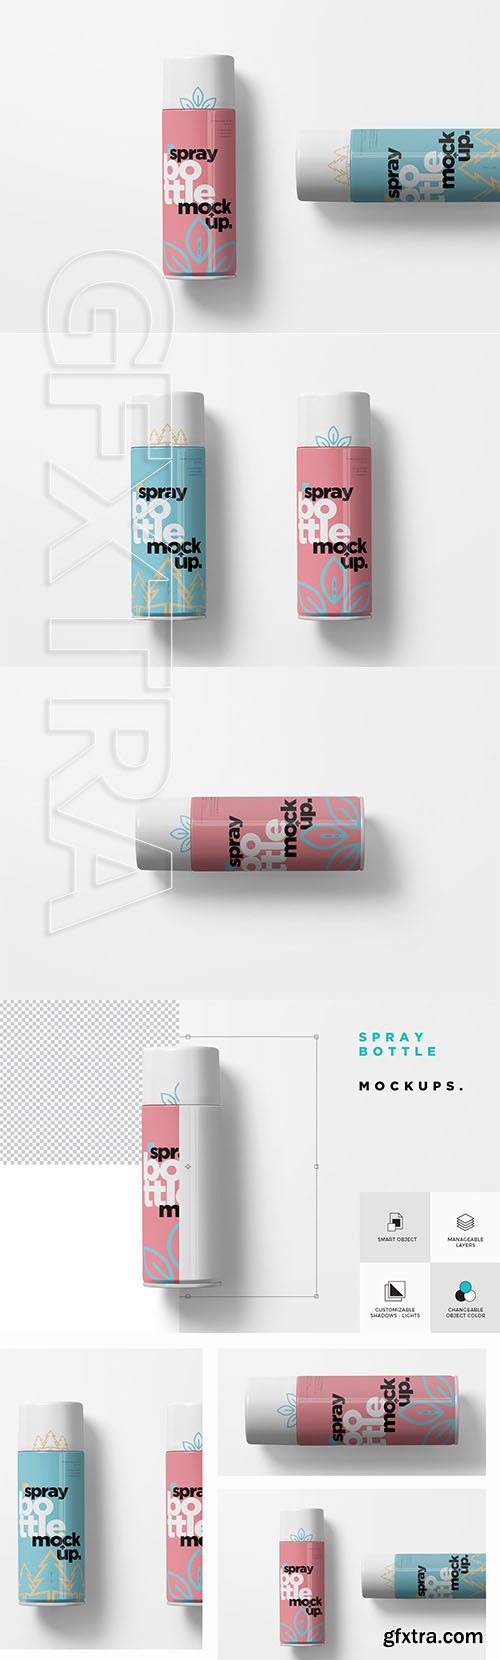 CreativeMarket - Spray Bottle Mockups 3525329